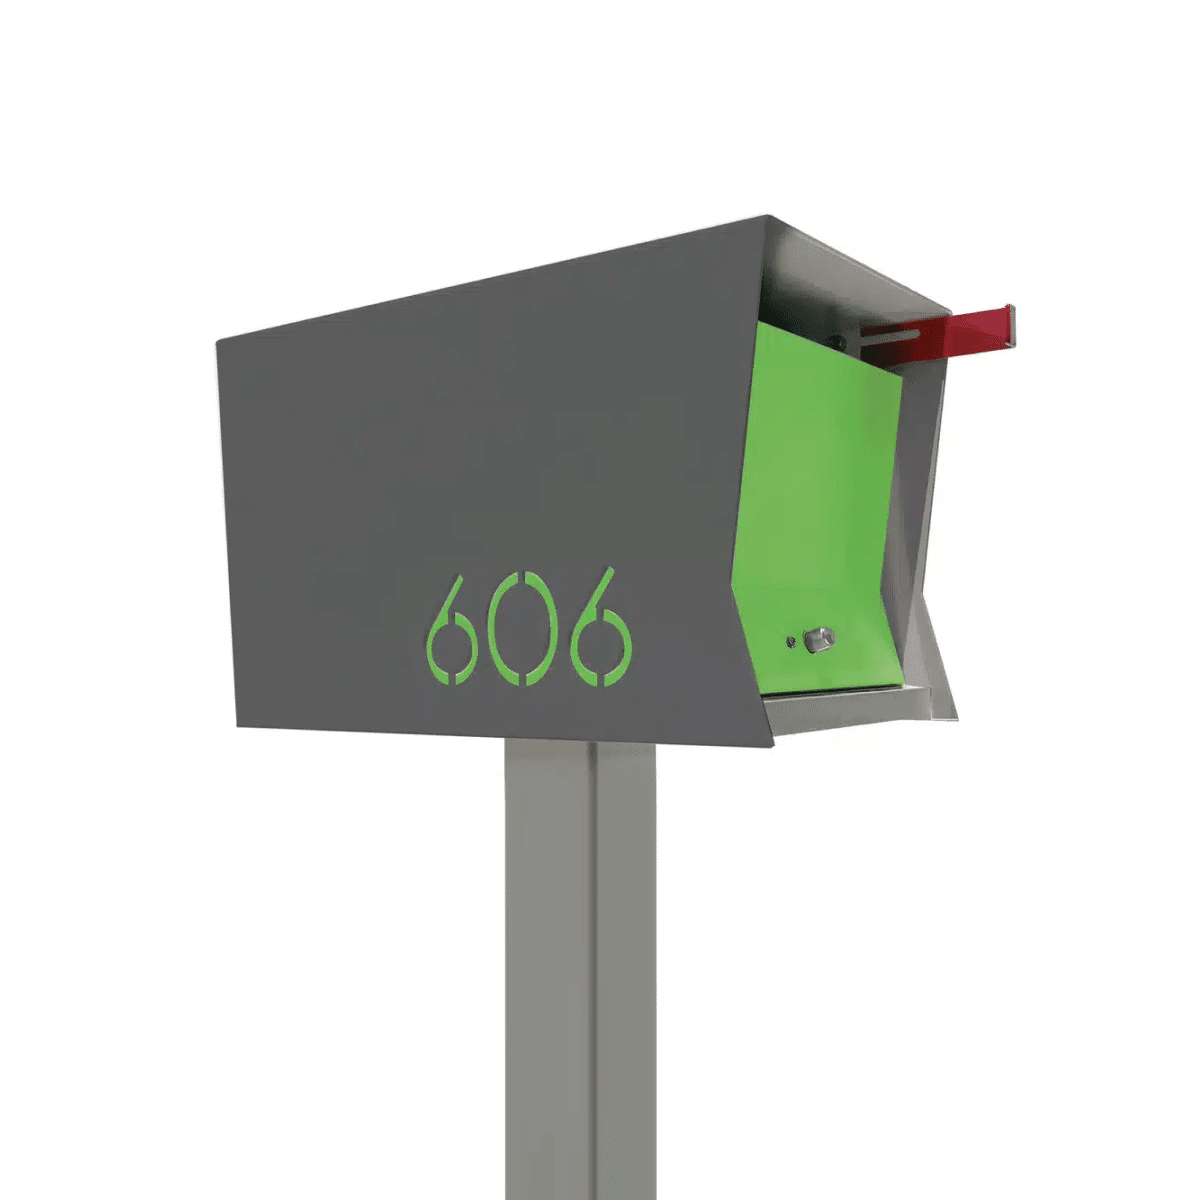 The Original Retrobox in Designer Gray – Modern Mailbox Product Image